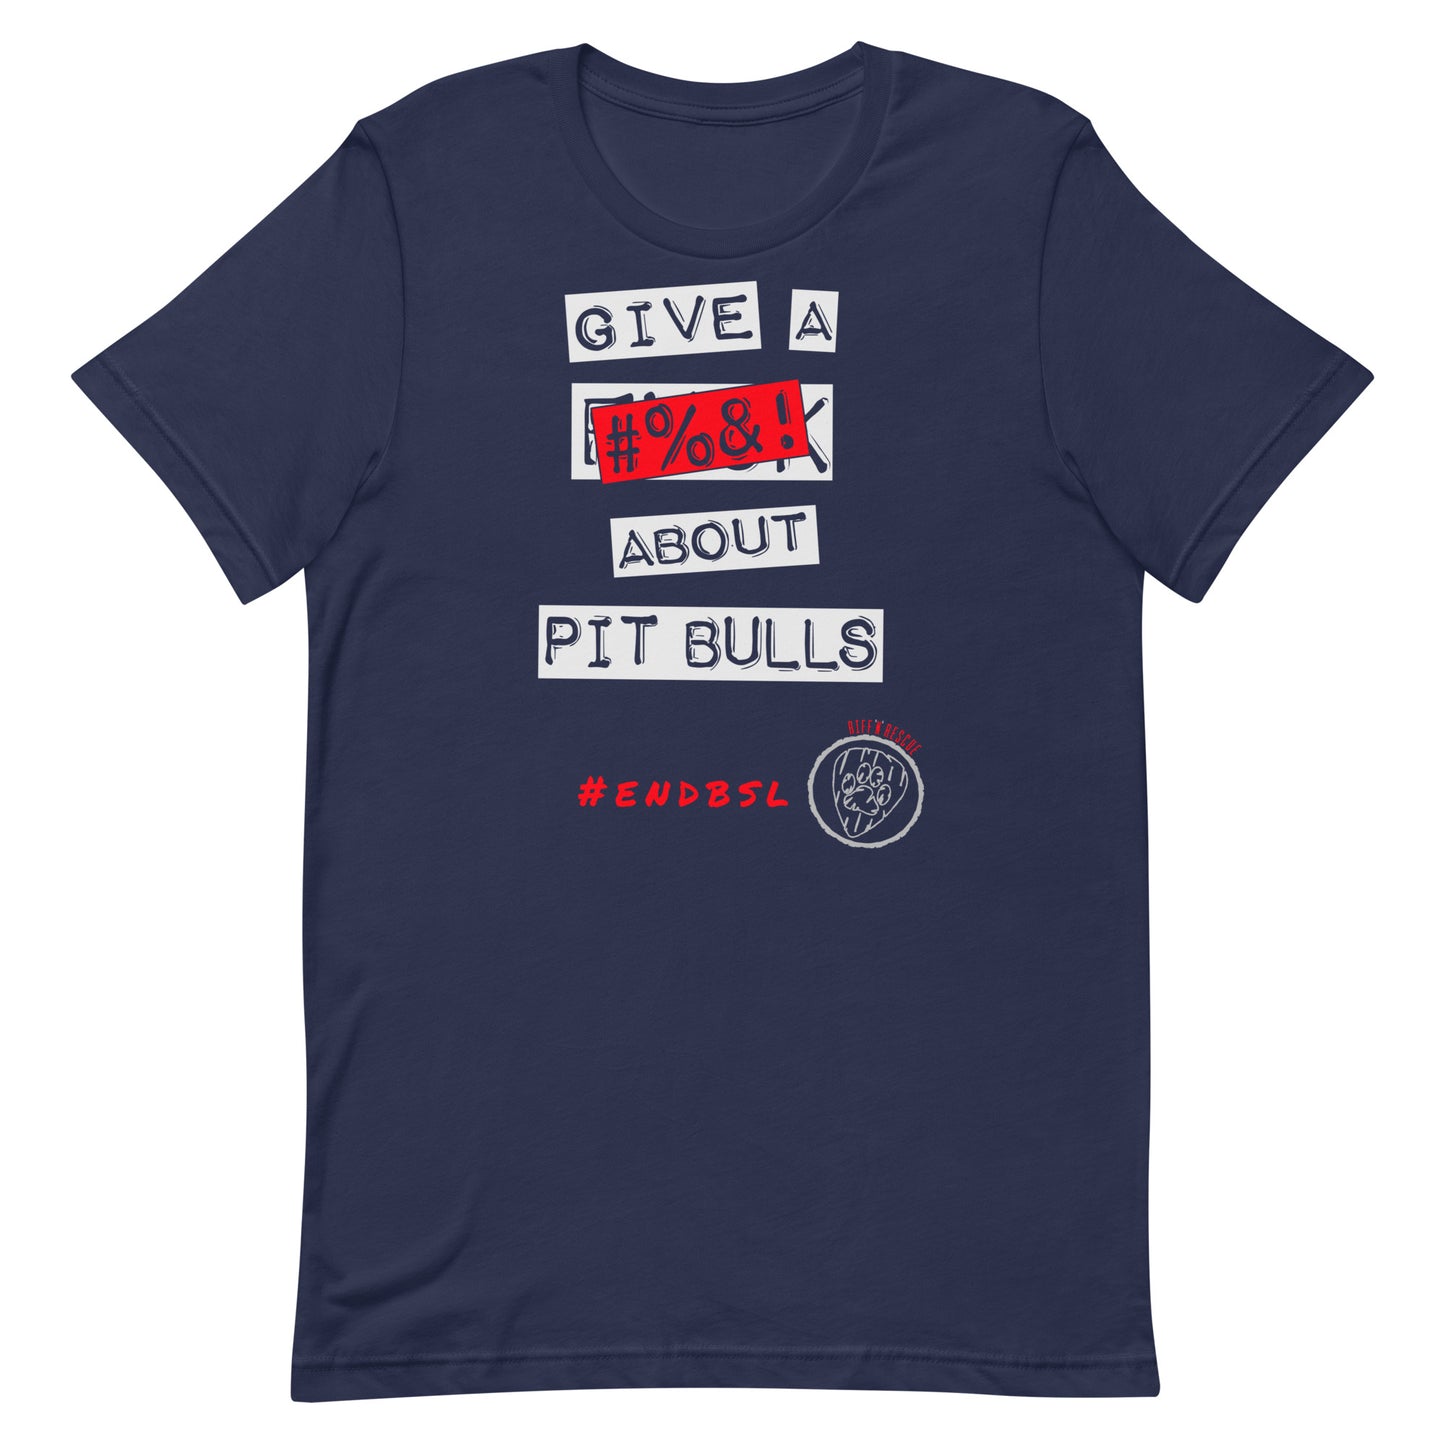 Give A #%&! About Pit Bulls Unisex t-shirt